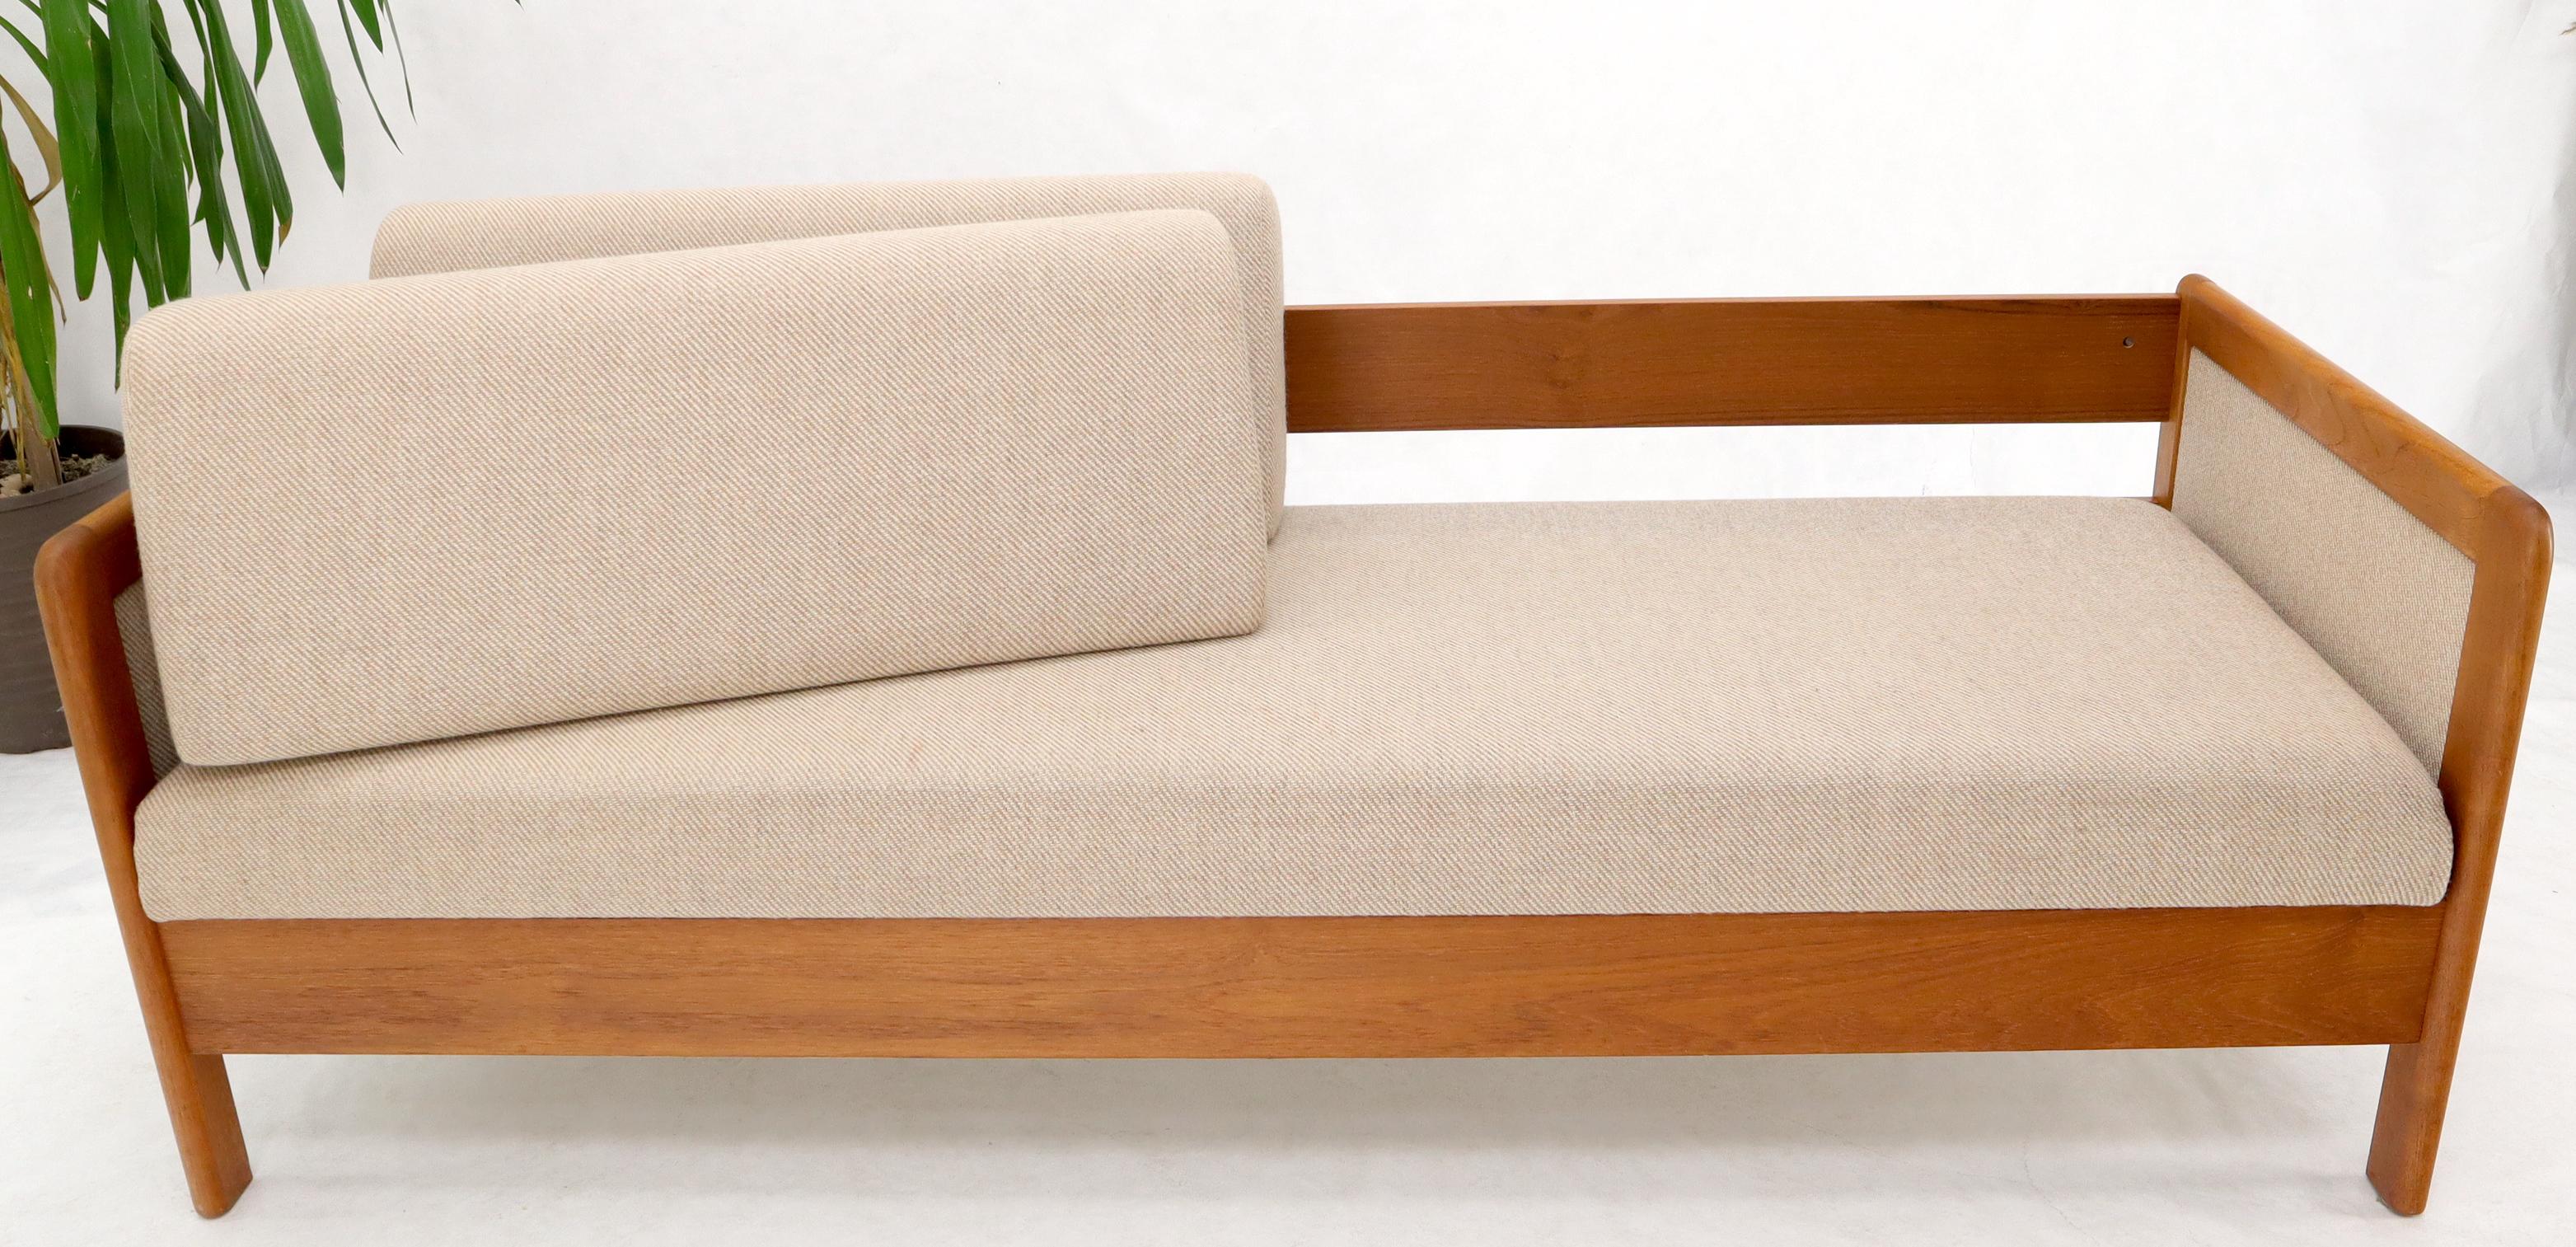 20th Century Danish Daybed Sleeper Convertible Sofa Wool Upholstery Teak Frame